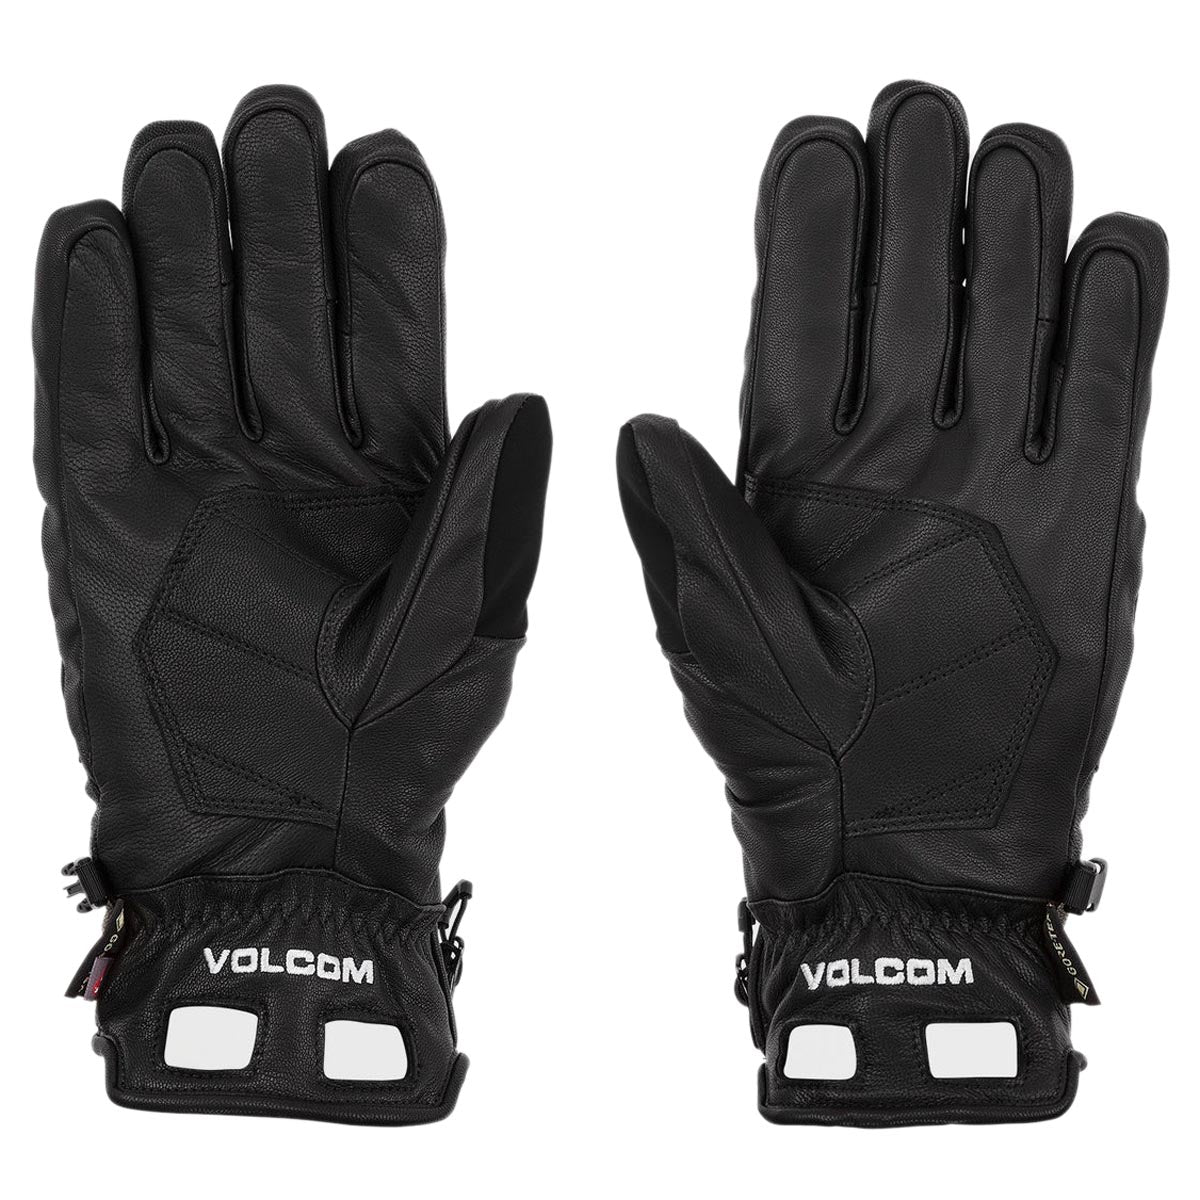 Volcom Service Gore-tex Snowboard Gloves - Black image 2